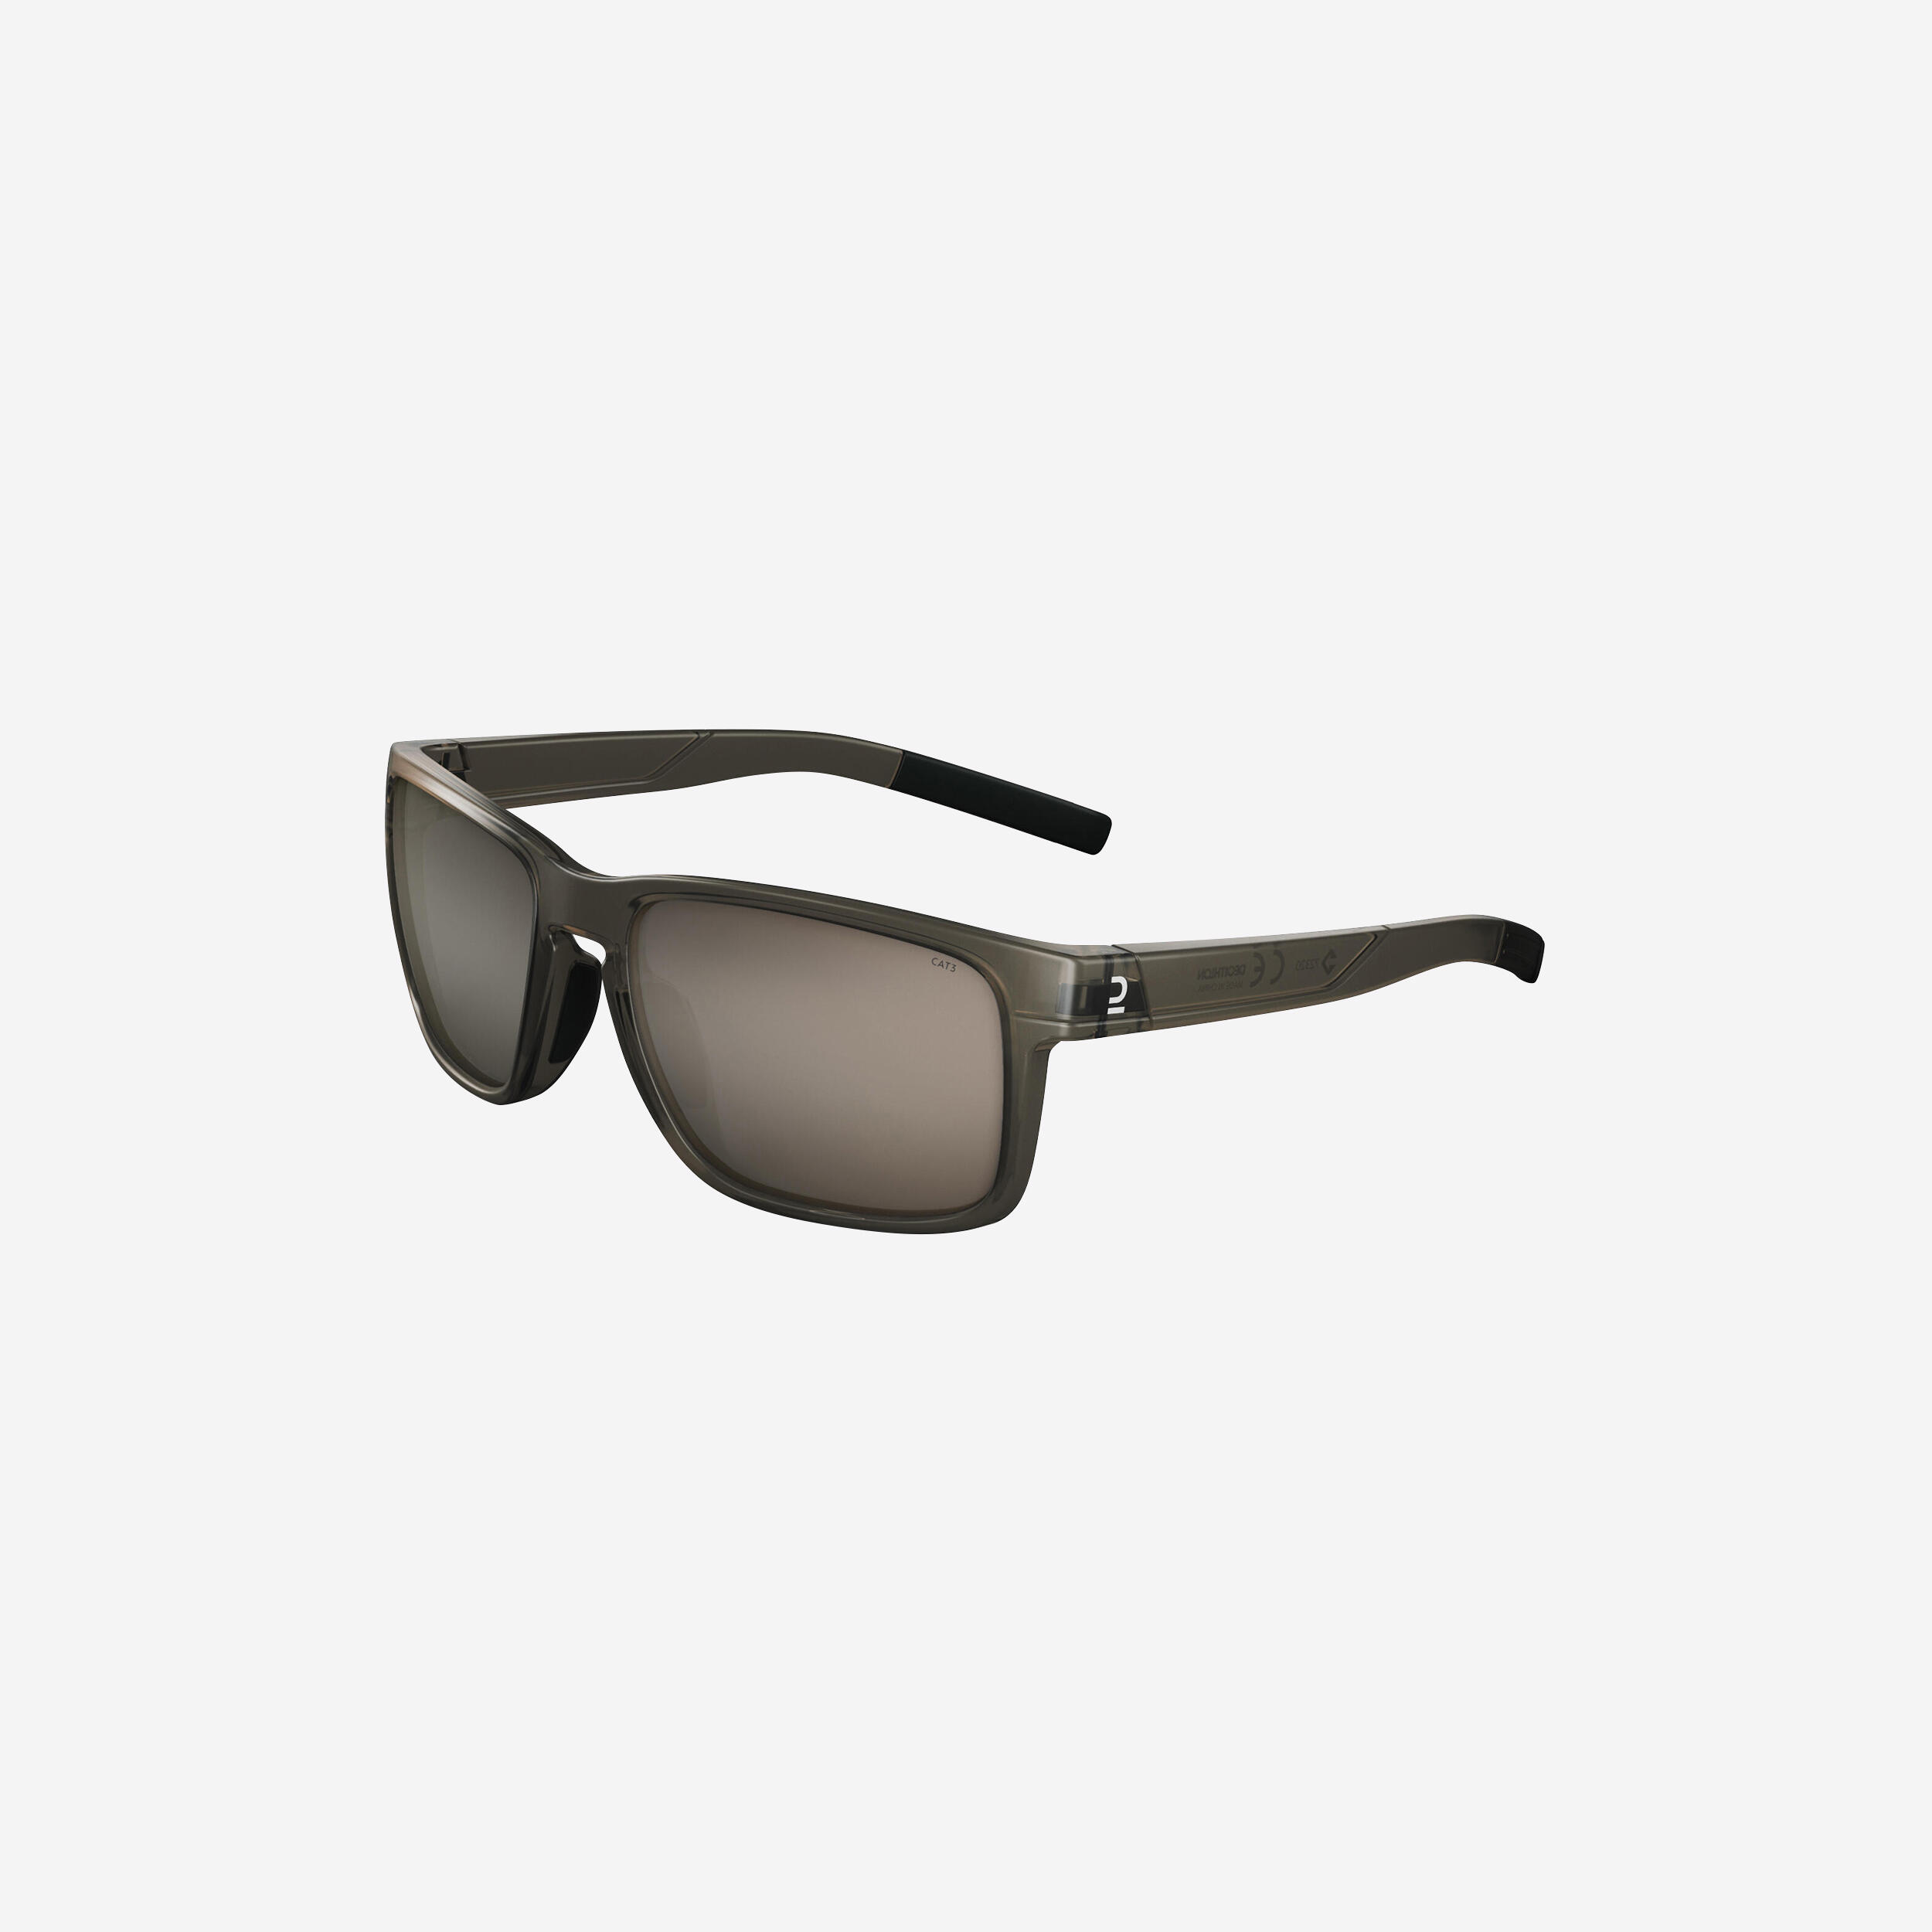 Hiking Sunglasses – MH 530 Black/Silver